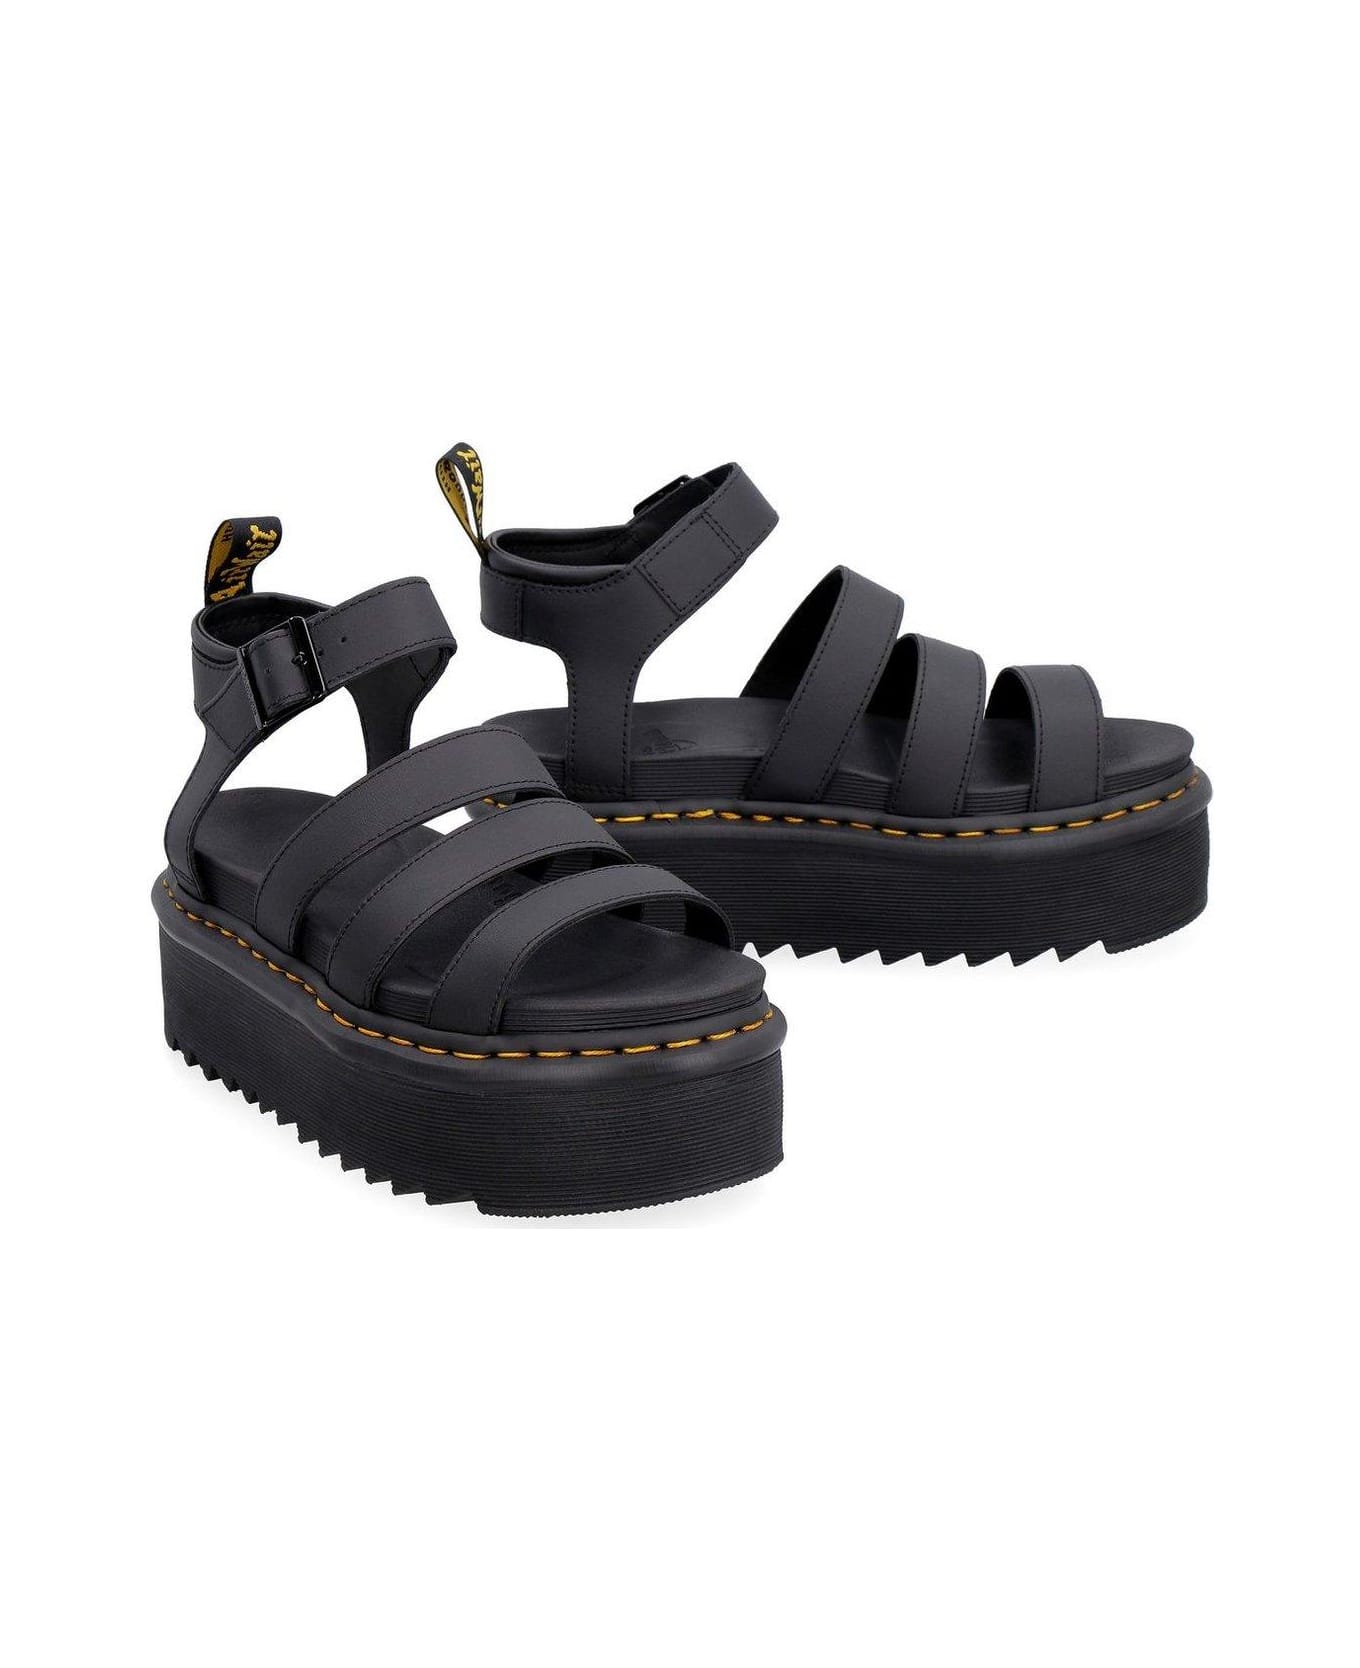 Dr. Martens Blaire Quad Hydro Open Toe Sandals - Black Hydro Leather サンダル